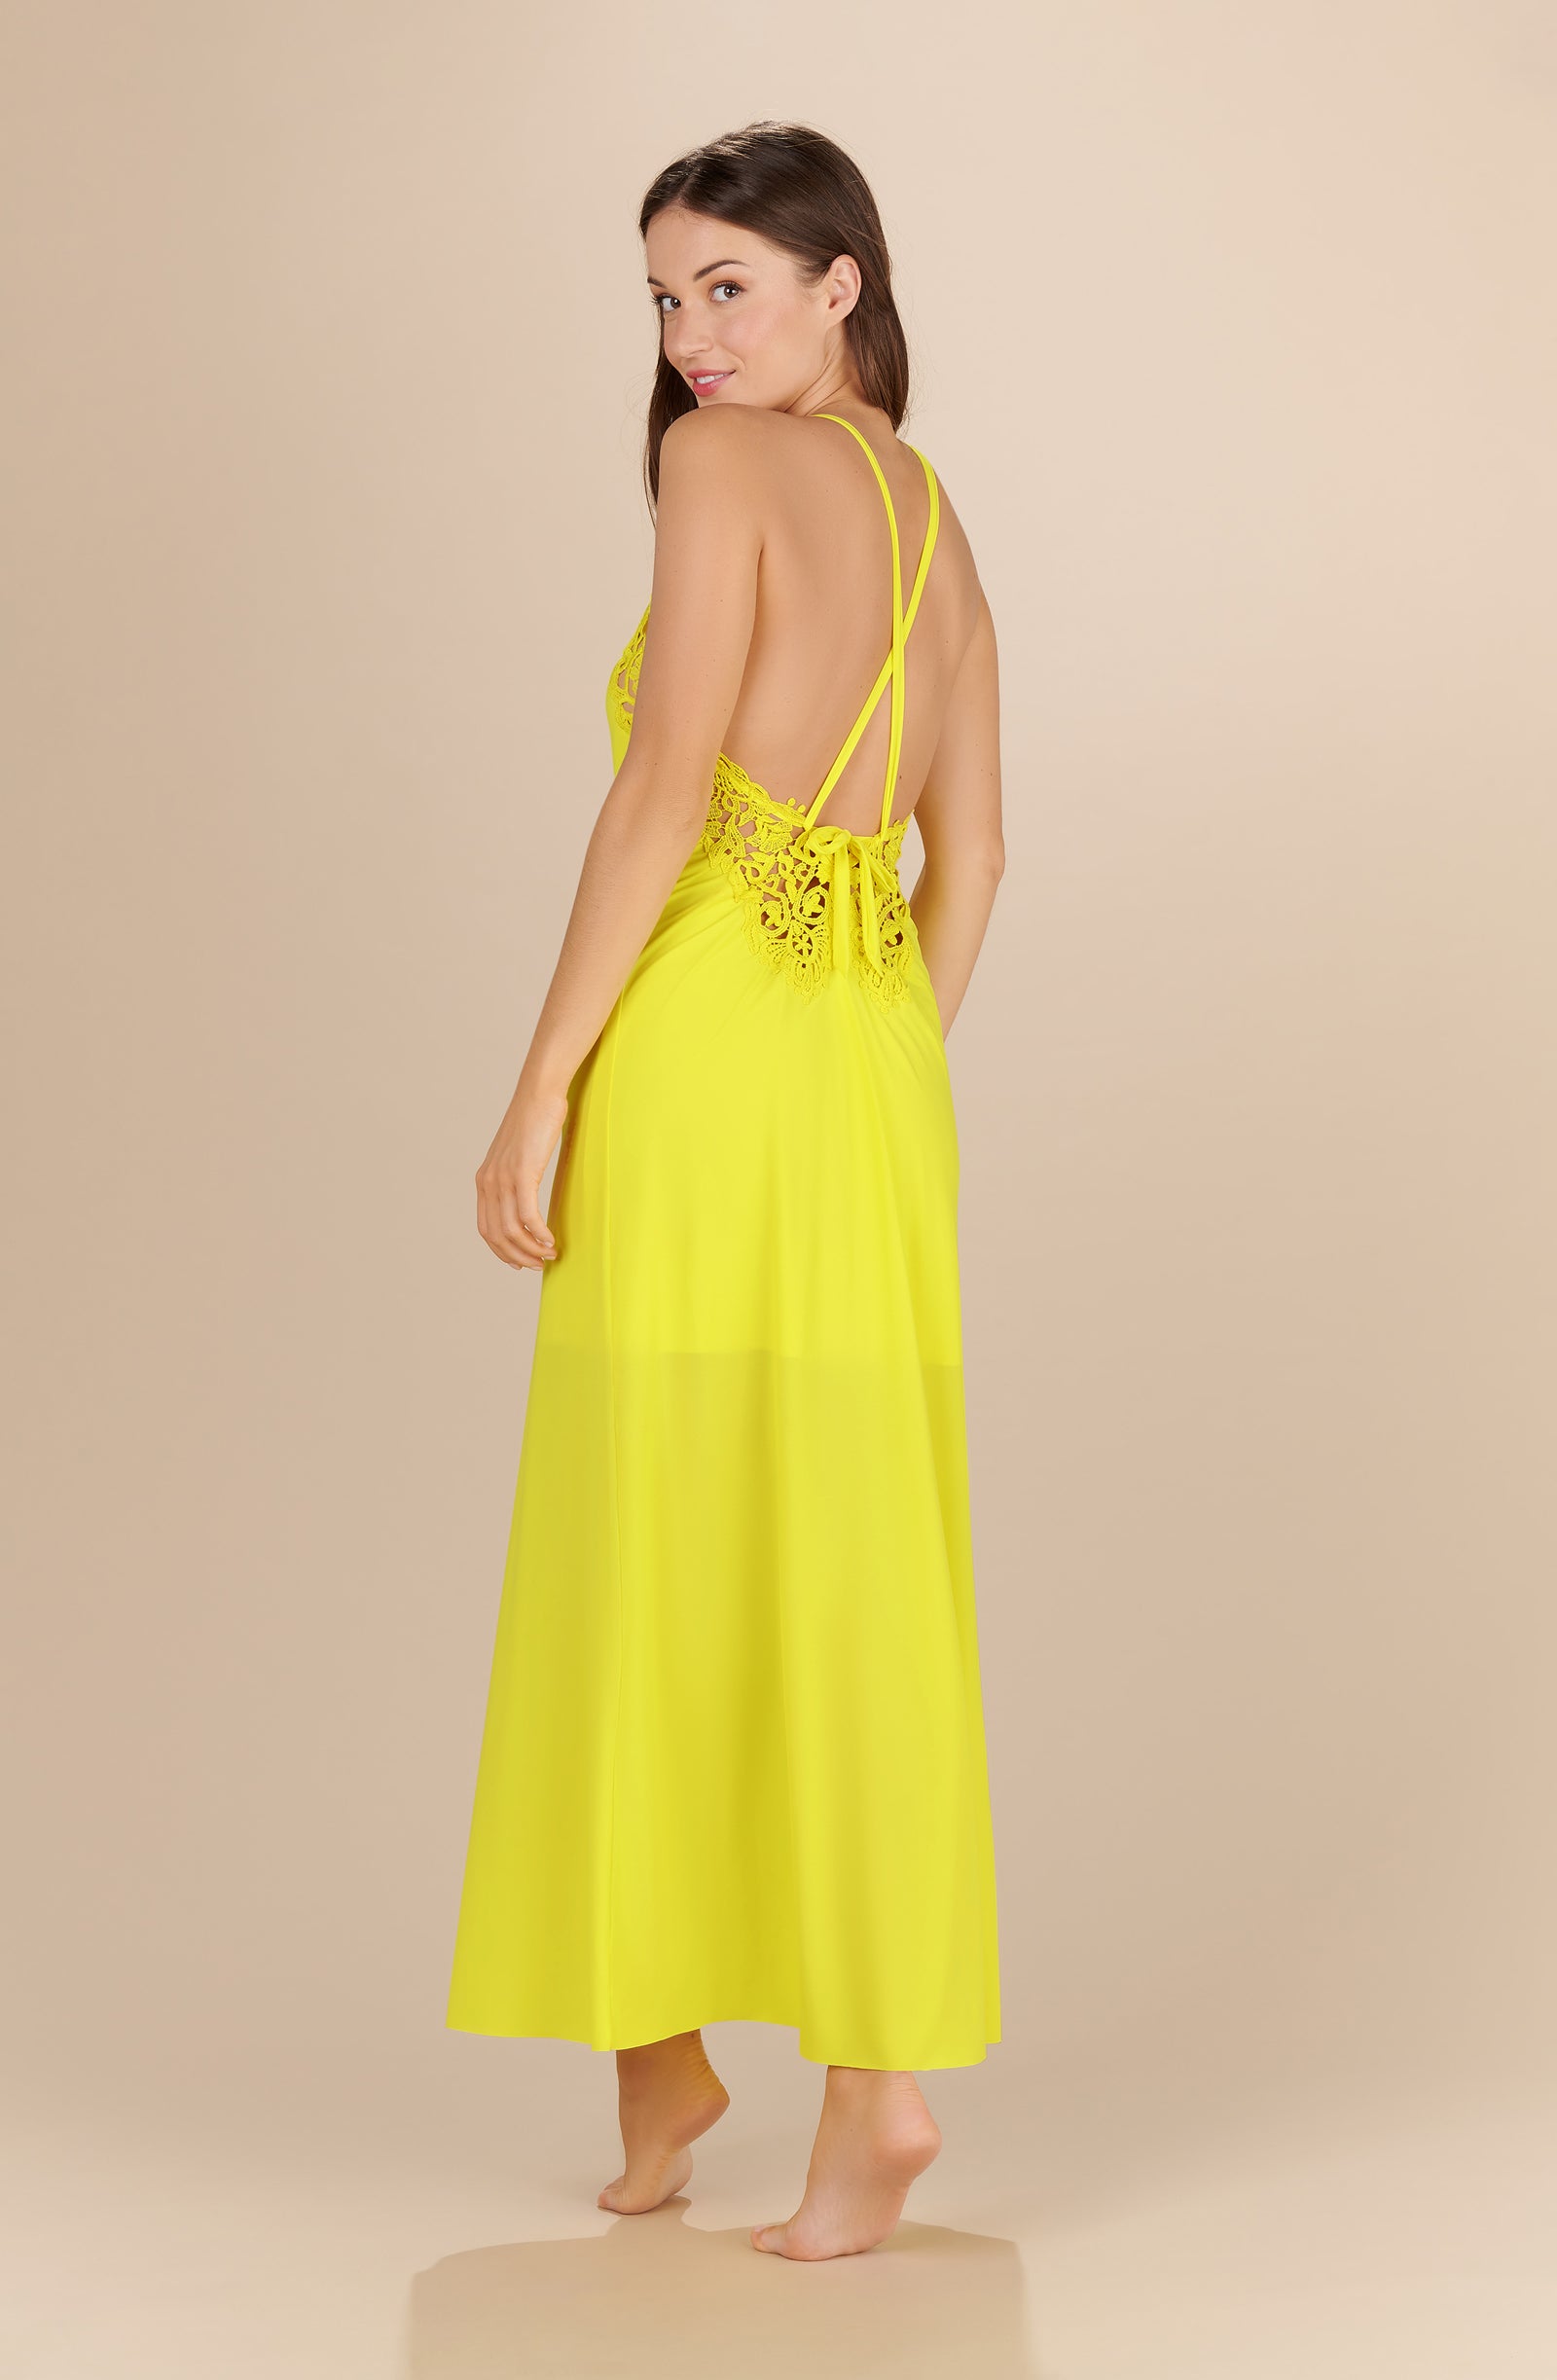 rowan - Long yellow halter neck dress